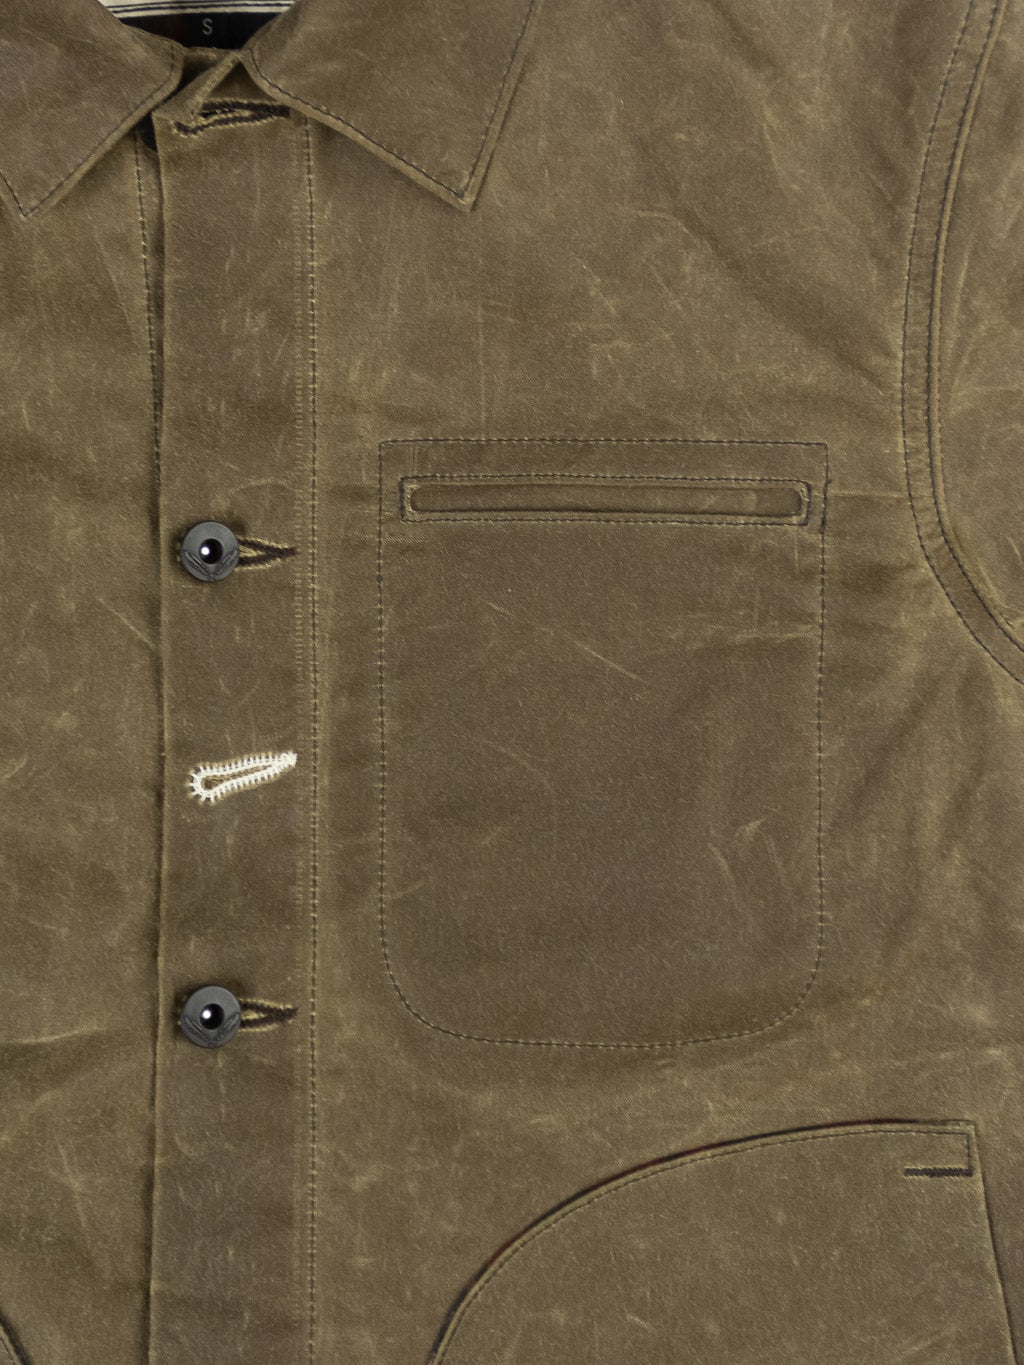 Rogue Territory Supply Jacket Brown Ridgeline chest pocket